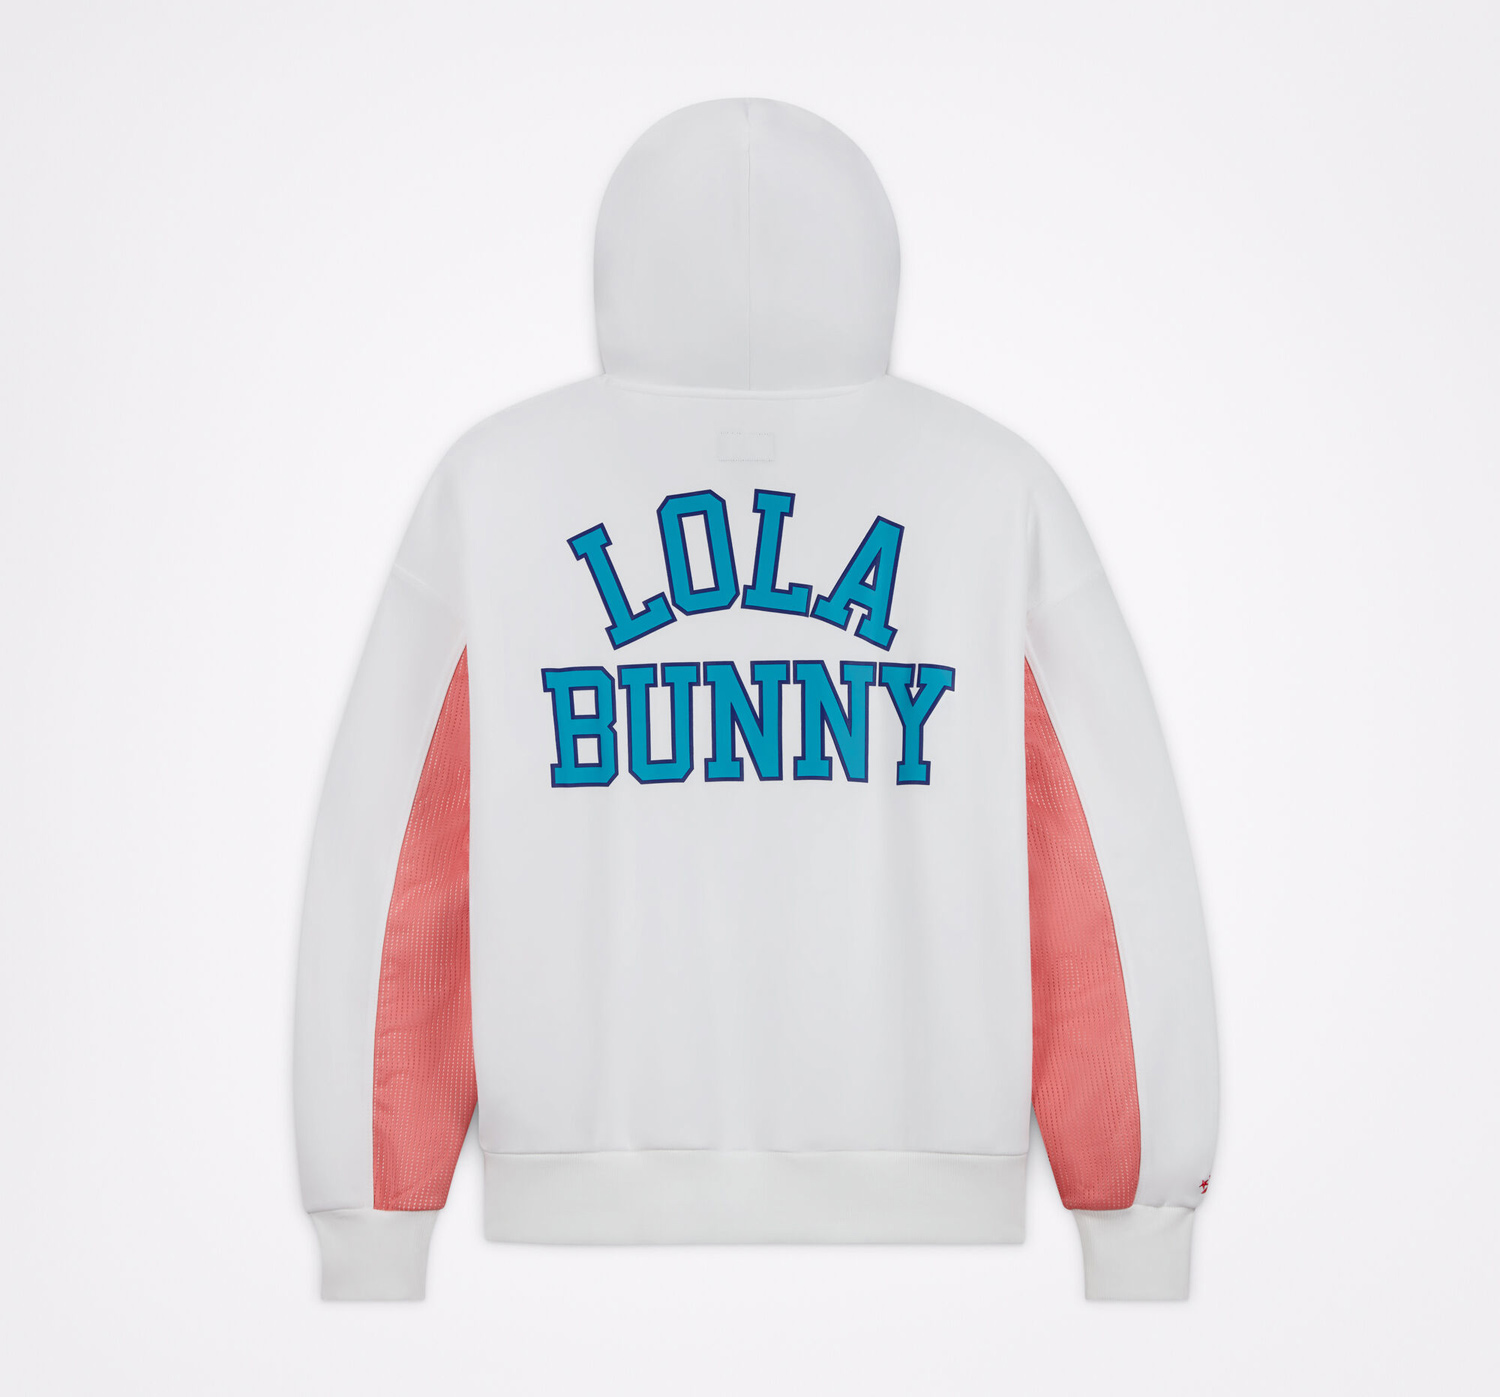 converse-space-lola-bunny-hoodie-2